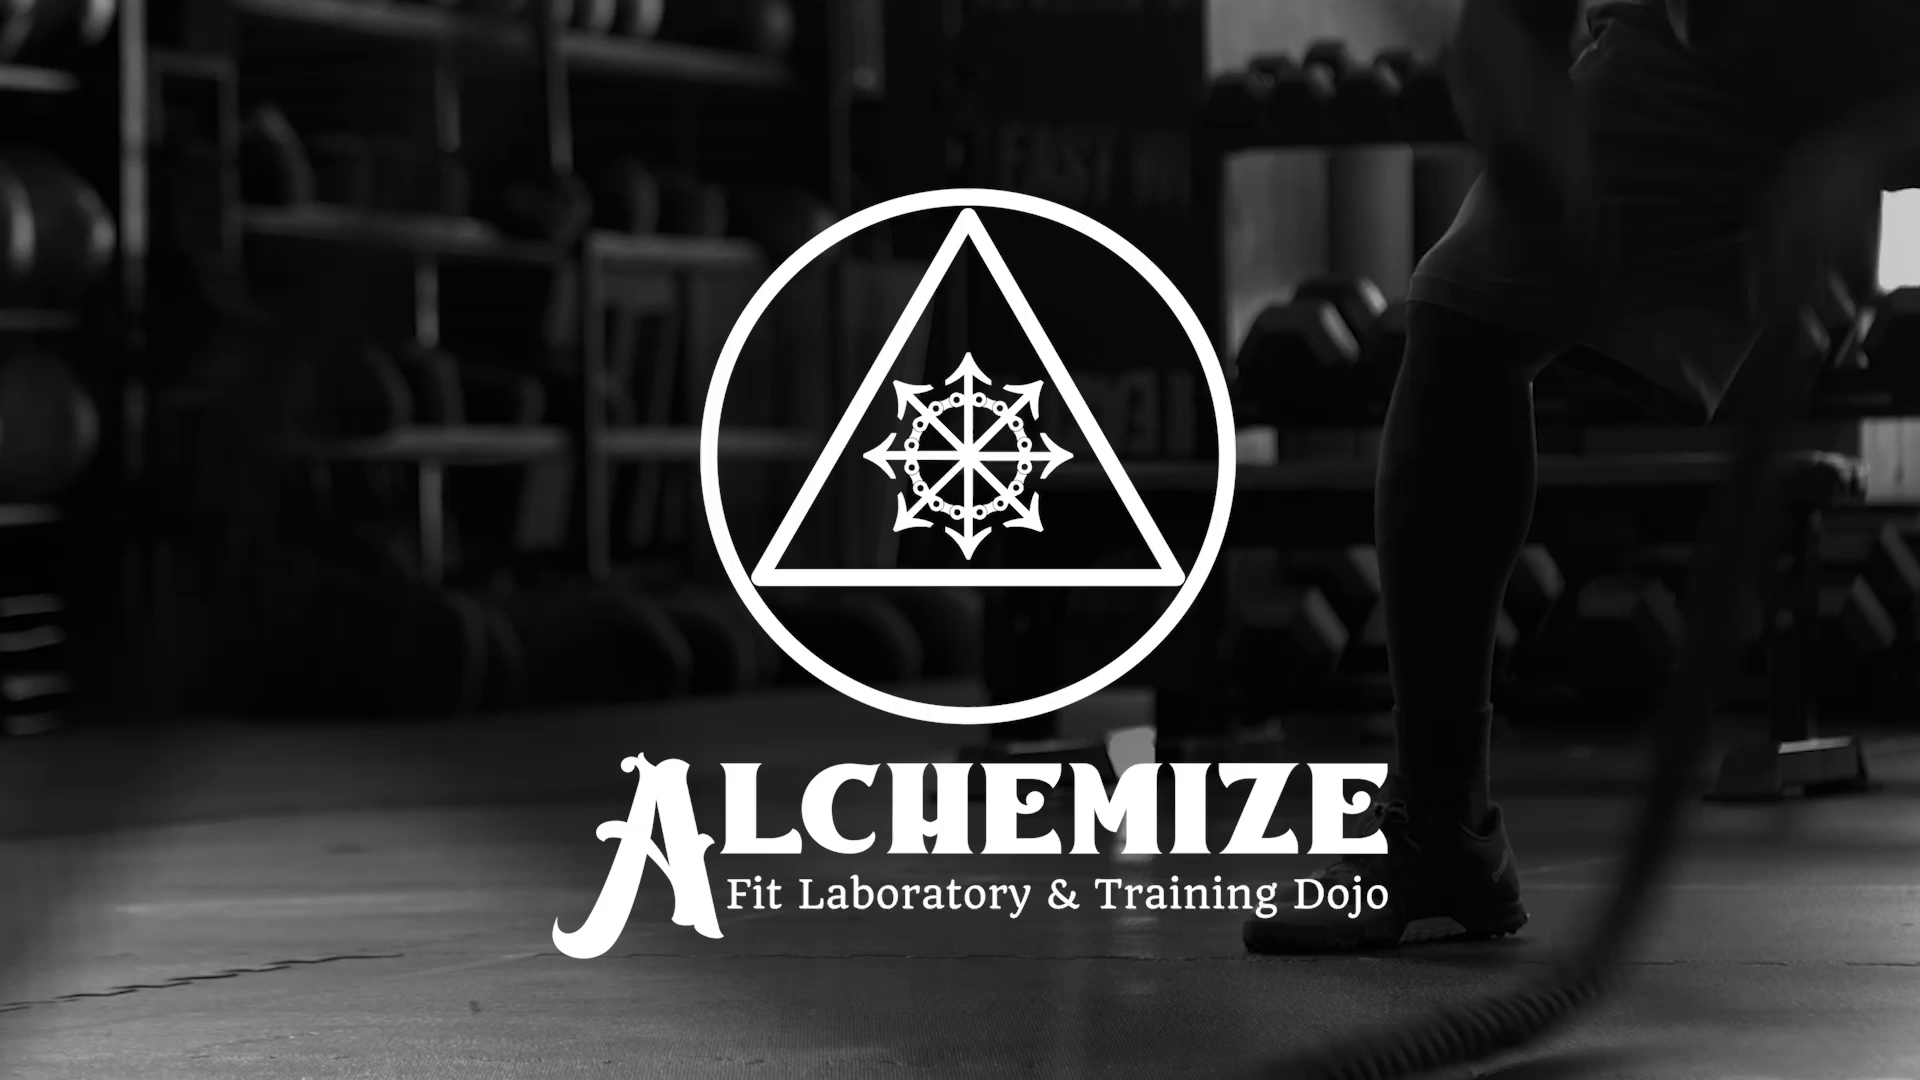 Alchemize - Fit Laboratory & Training Dojo